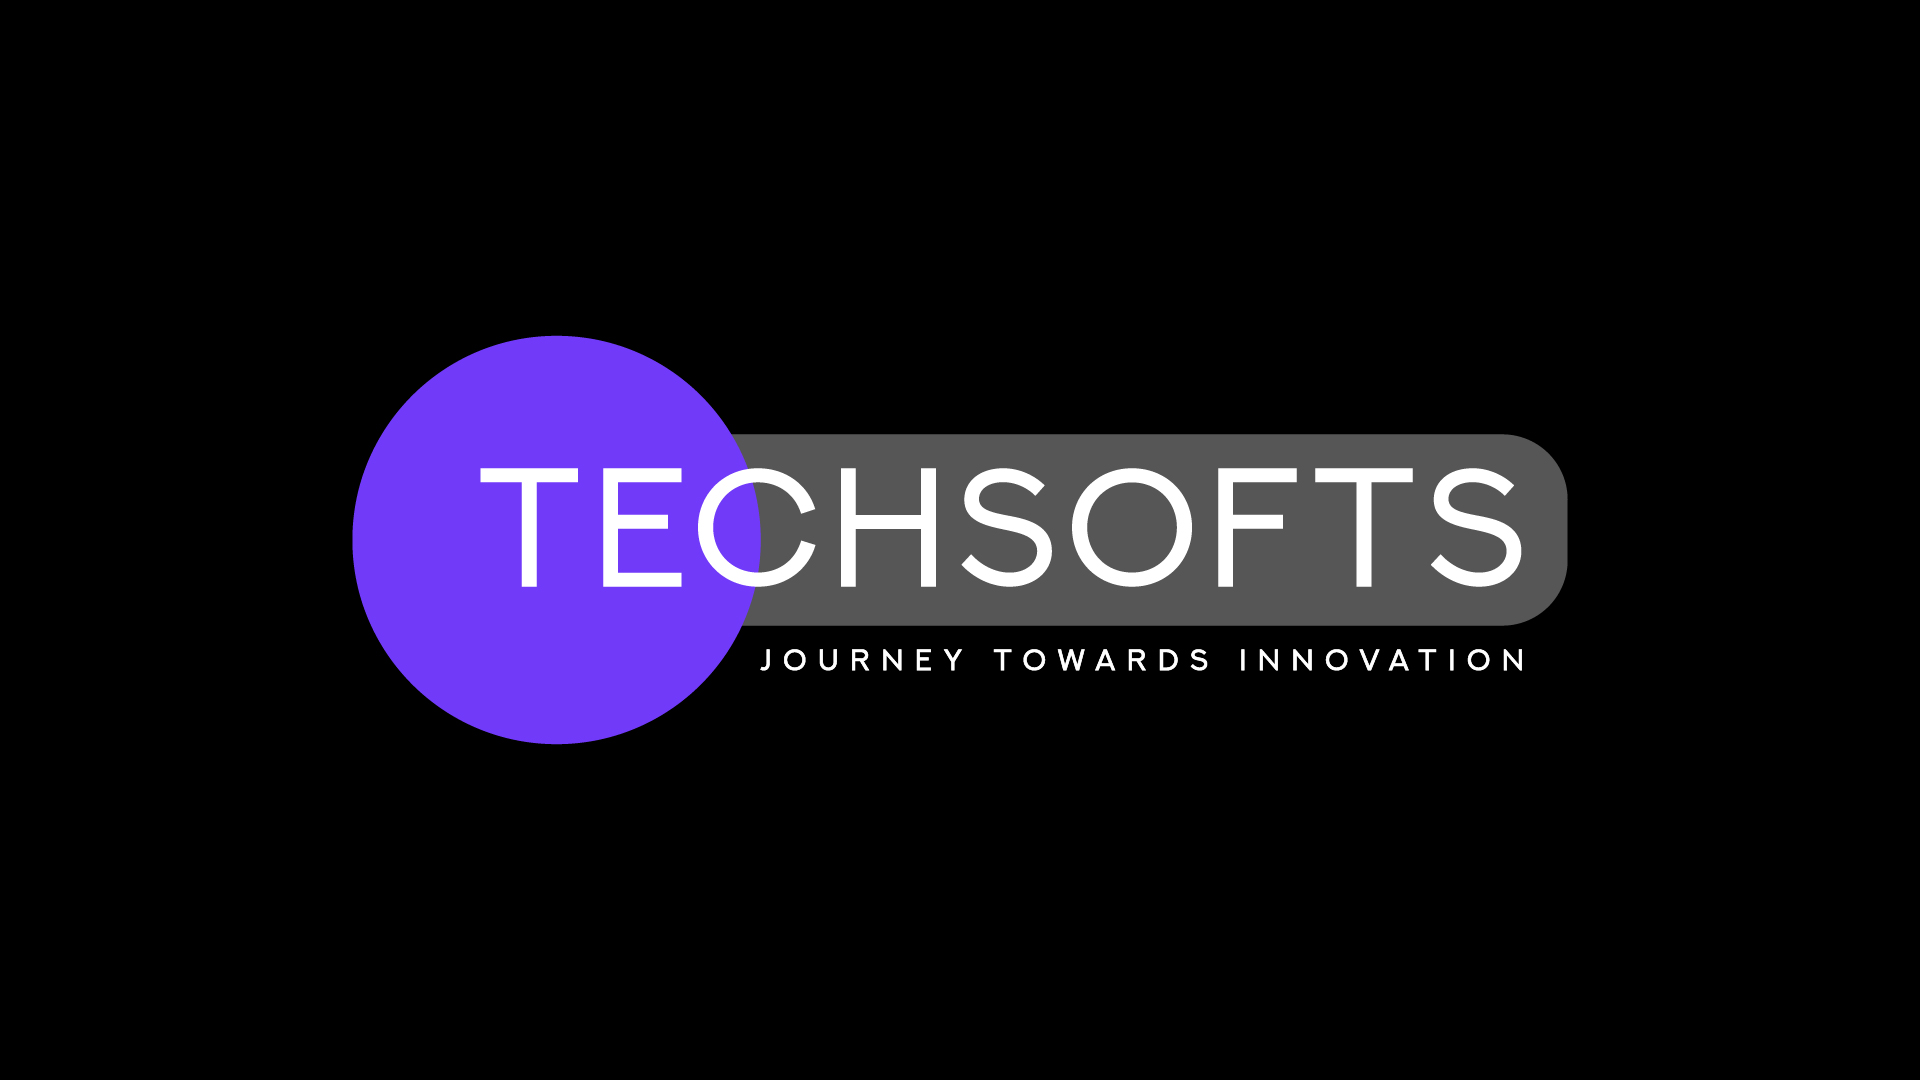 Techsofts International Limited